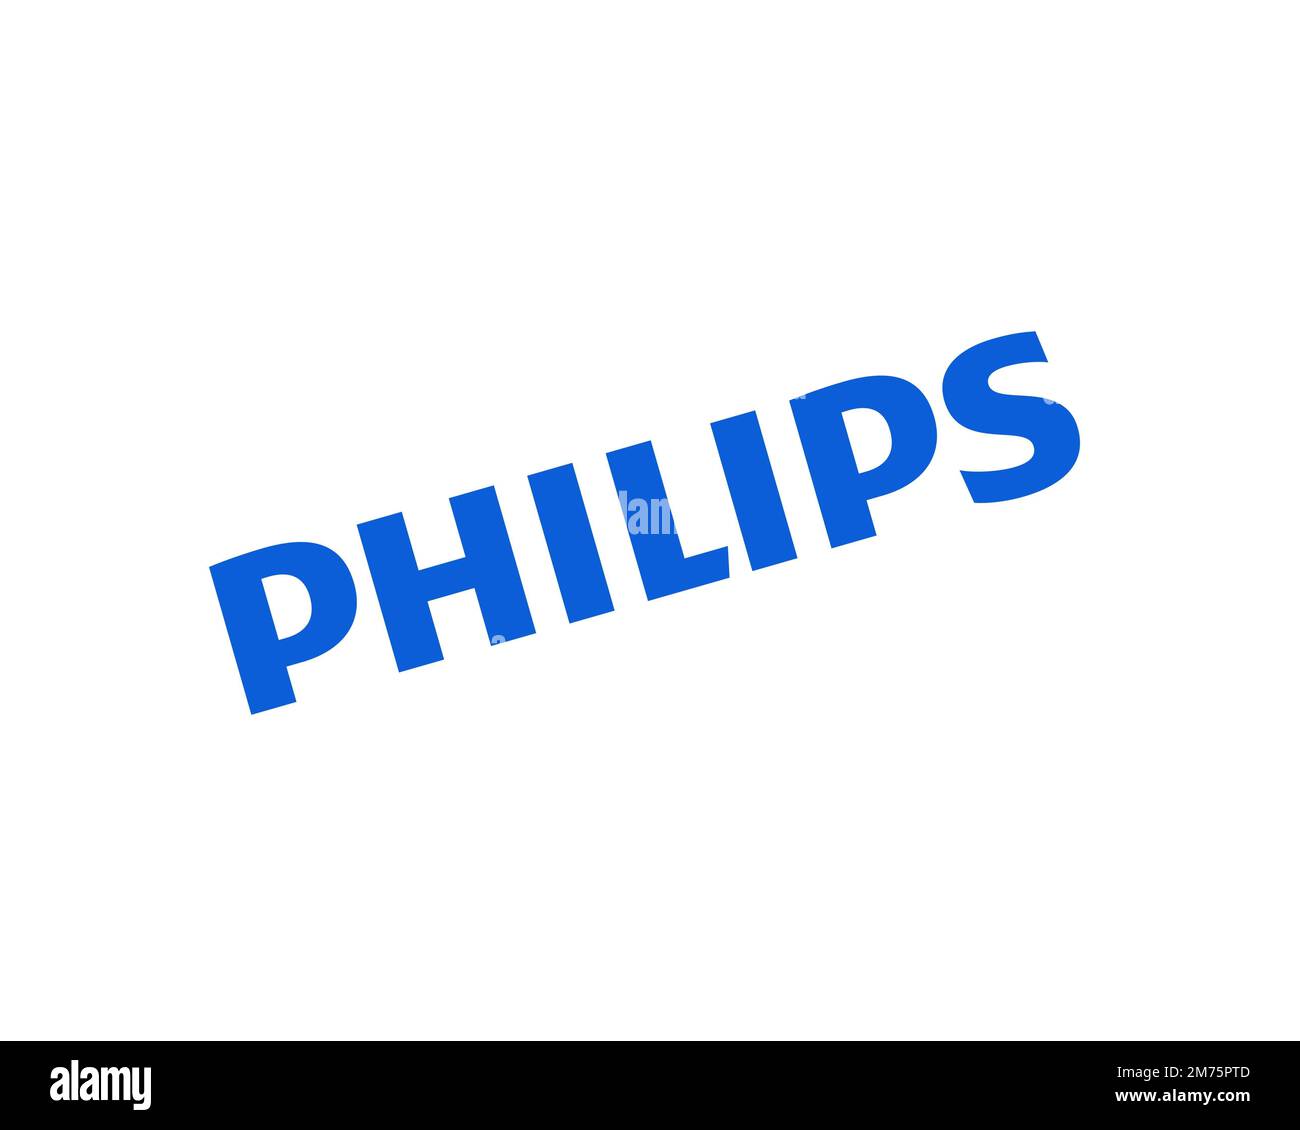 Philips, rotated logo, white background Stock Photo - Alamy